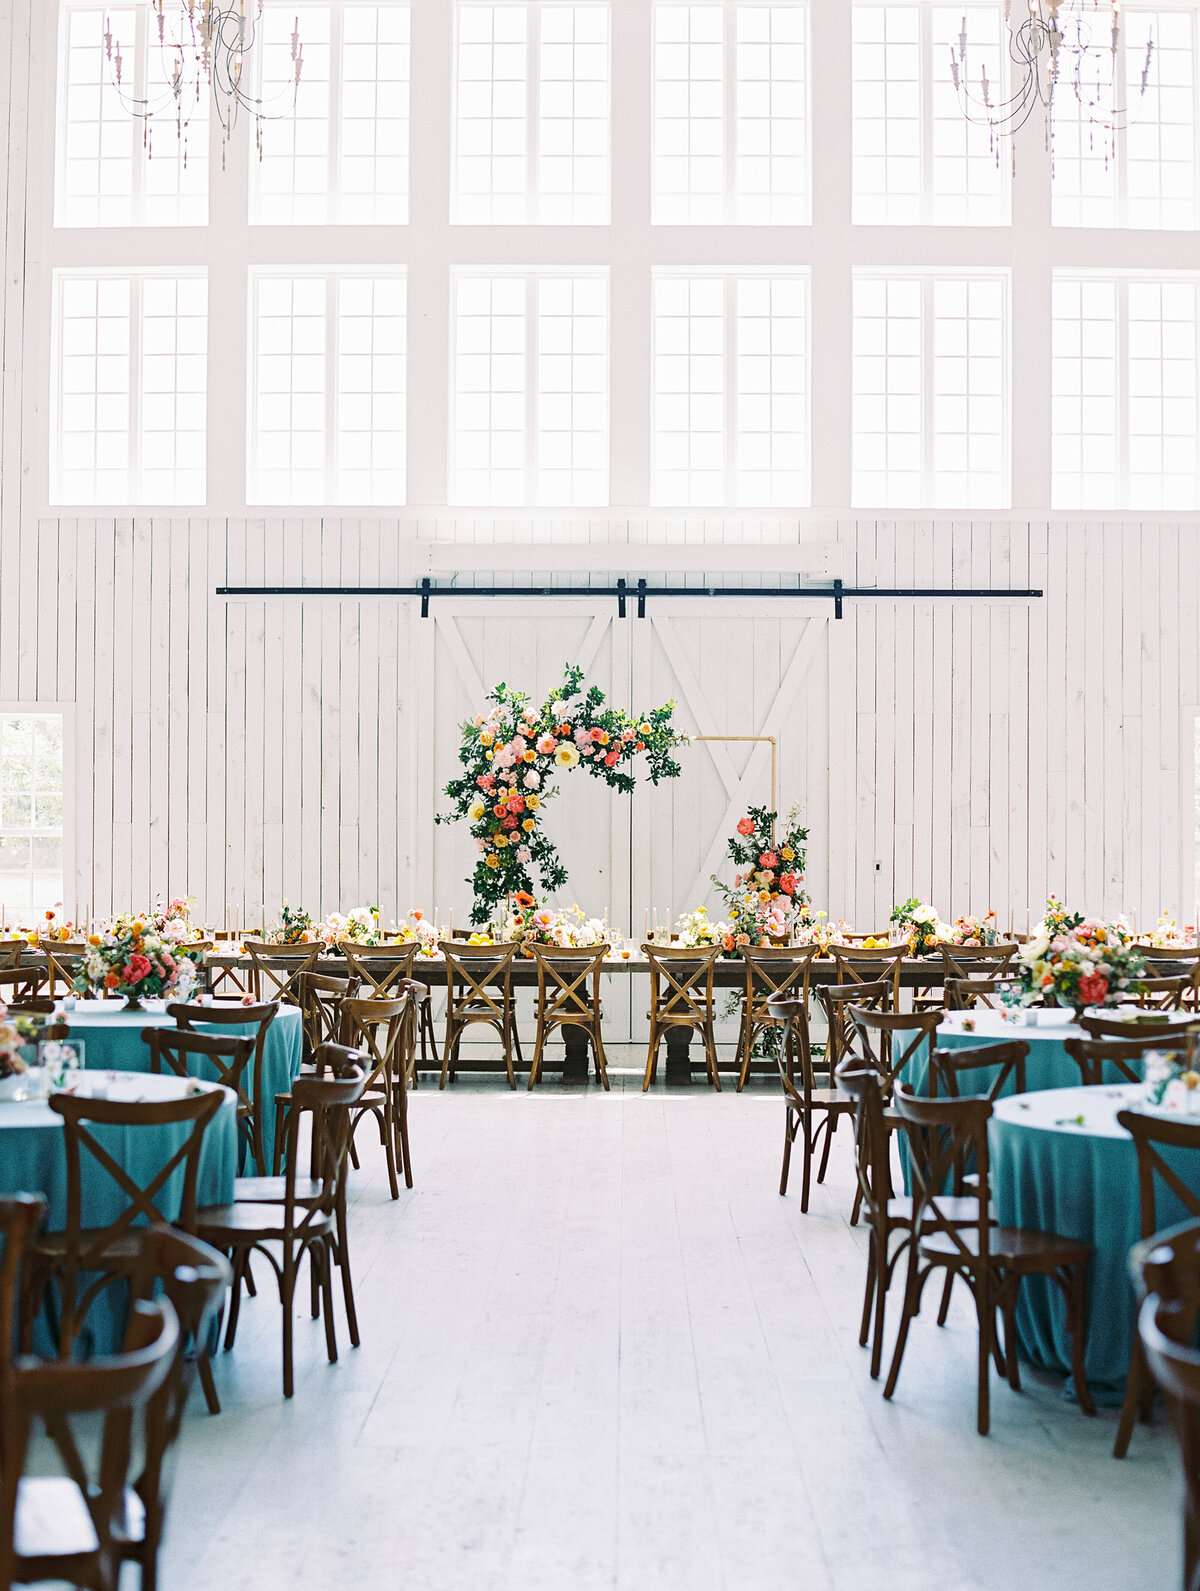 max-owens-design-bright-summer-wedding-15-reception-barn